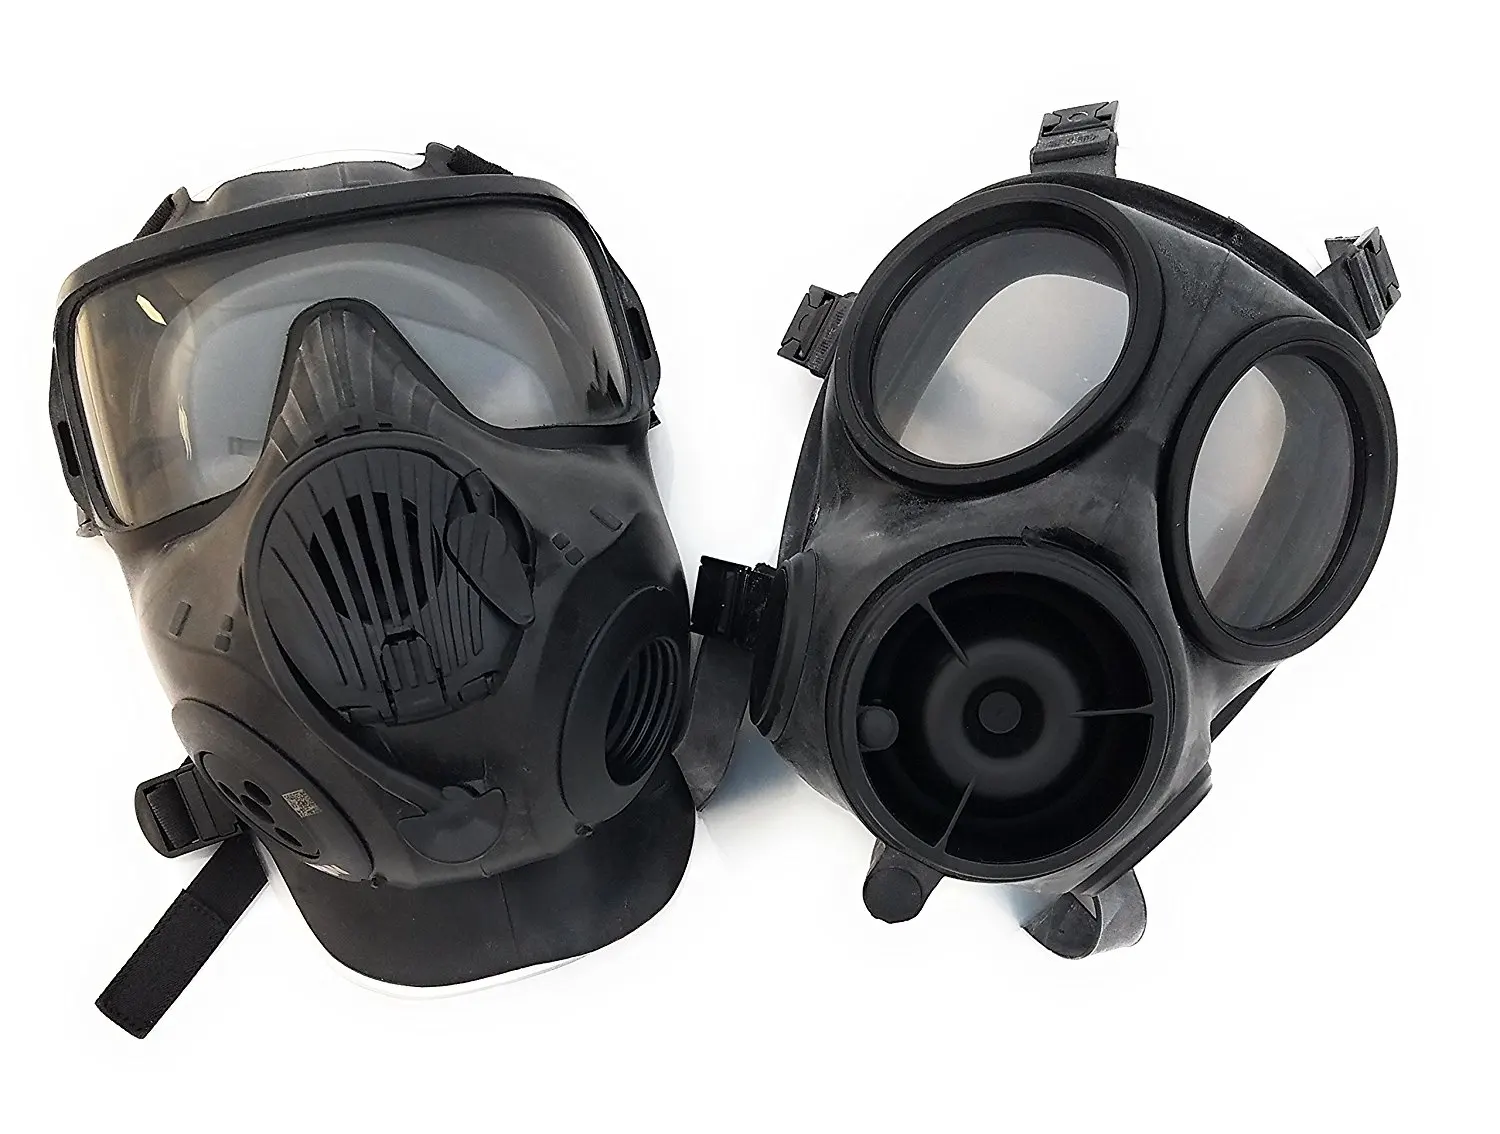 avon gas mask c50 type a adapter